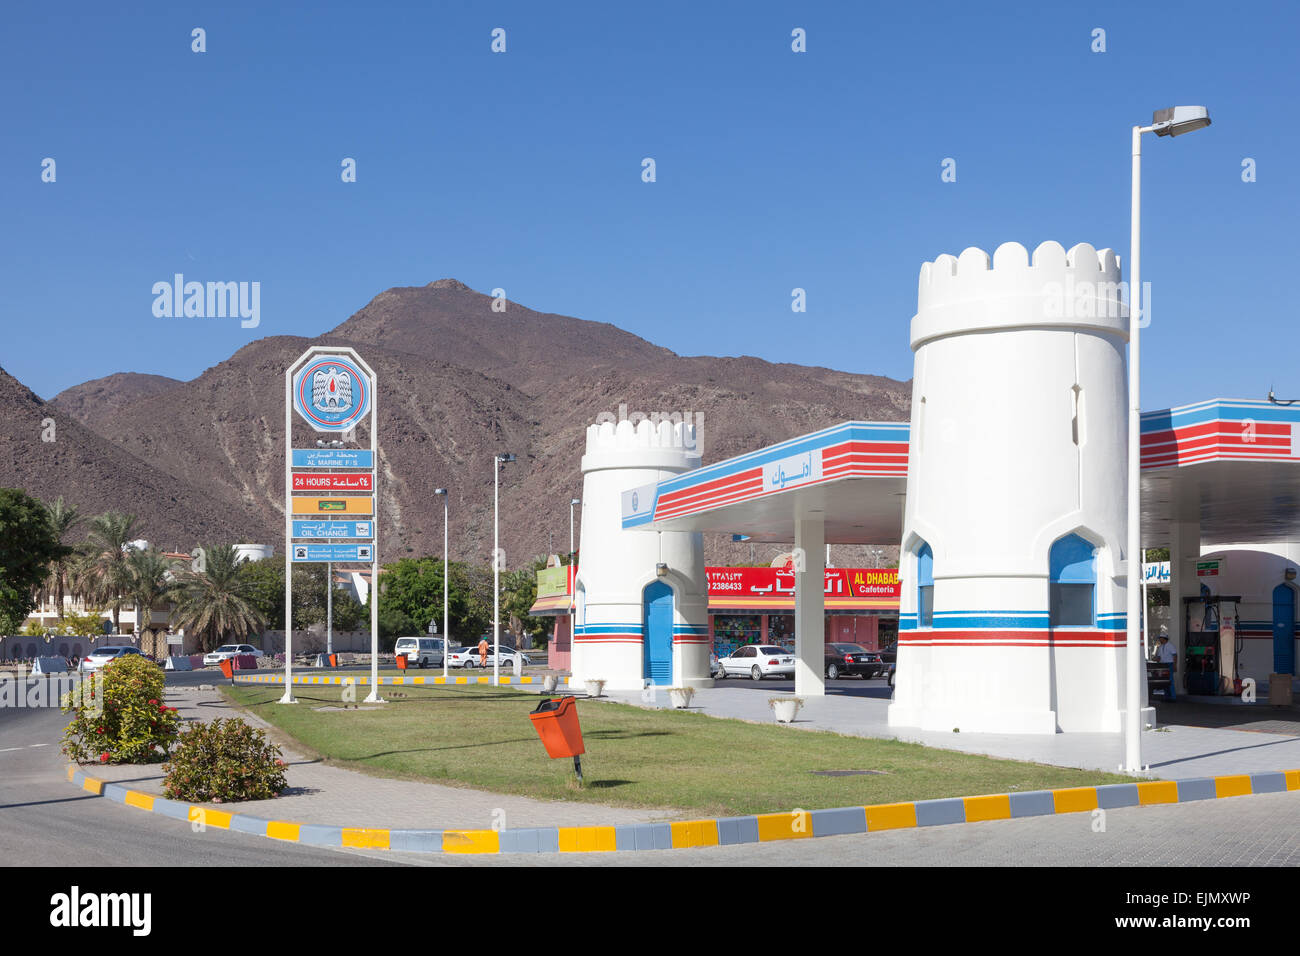 ADNOC stazione di benzina in Emirato di Fujairah. Dicembre 14, 2014 in Fujairah, Emirati Arabi Uniti Foto Stock